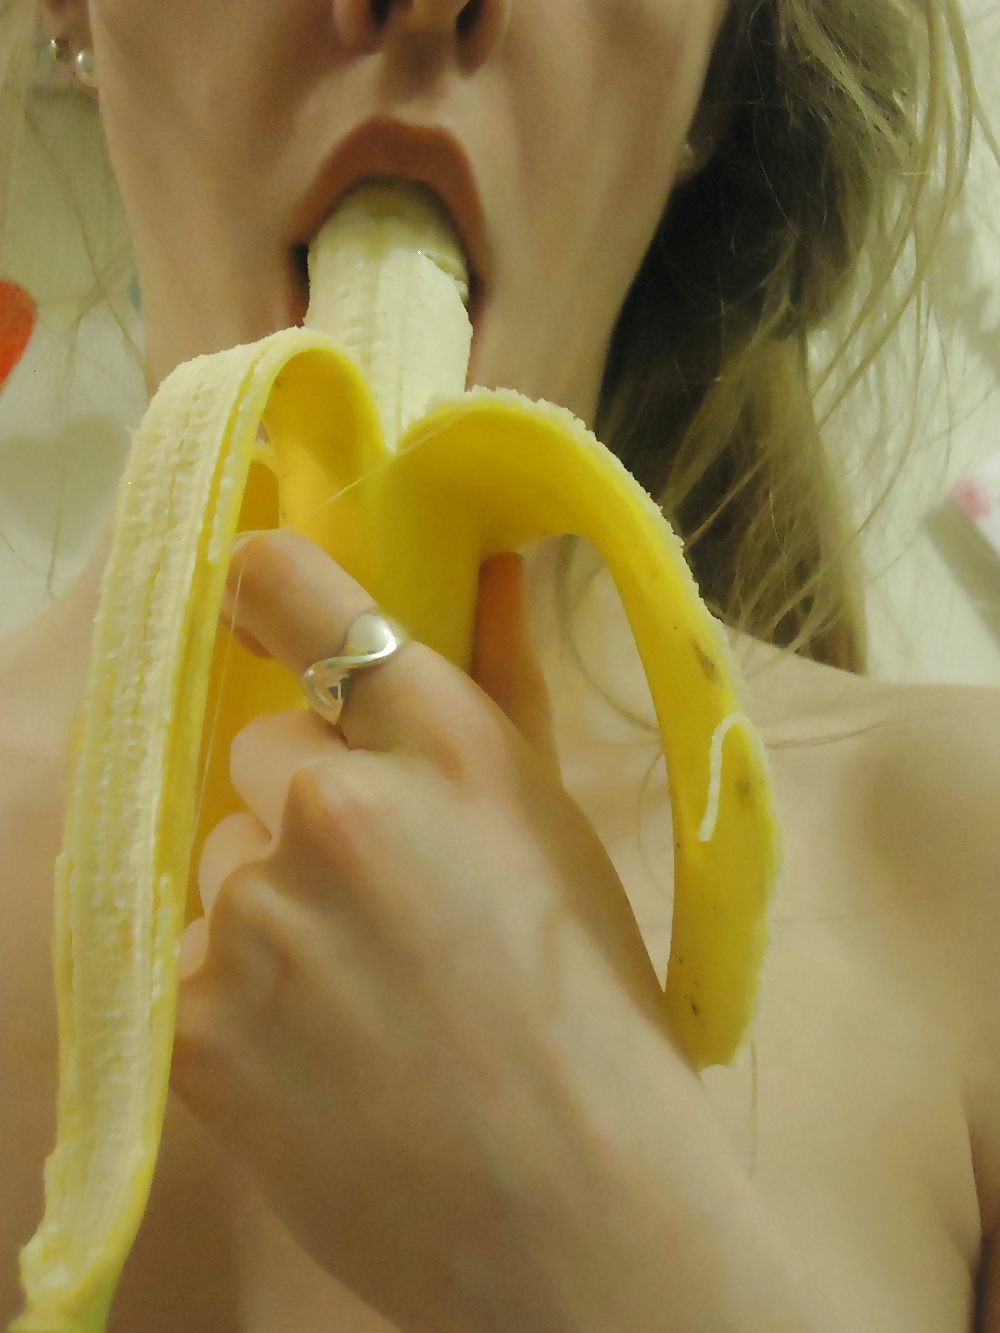 Sexy Pale Amateur Girl Sucks A Banana #34429696